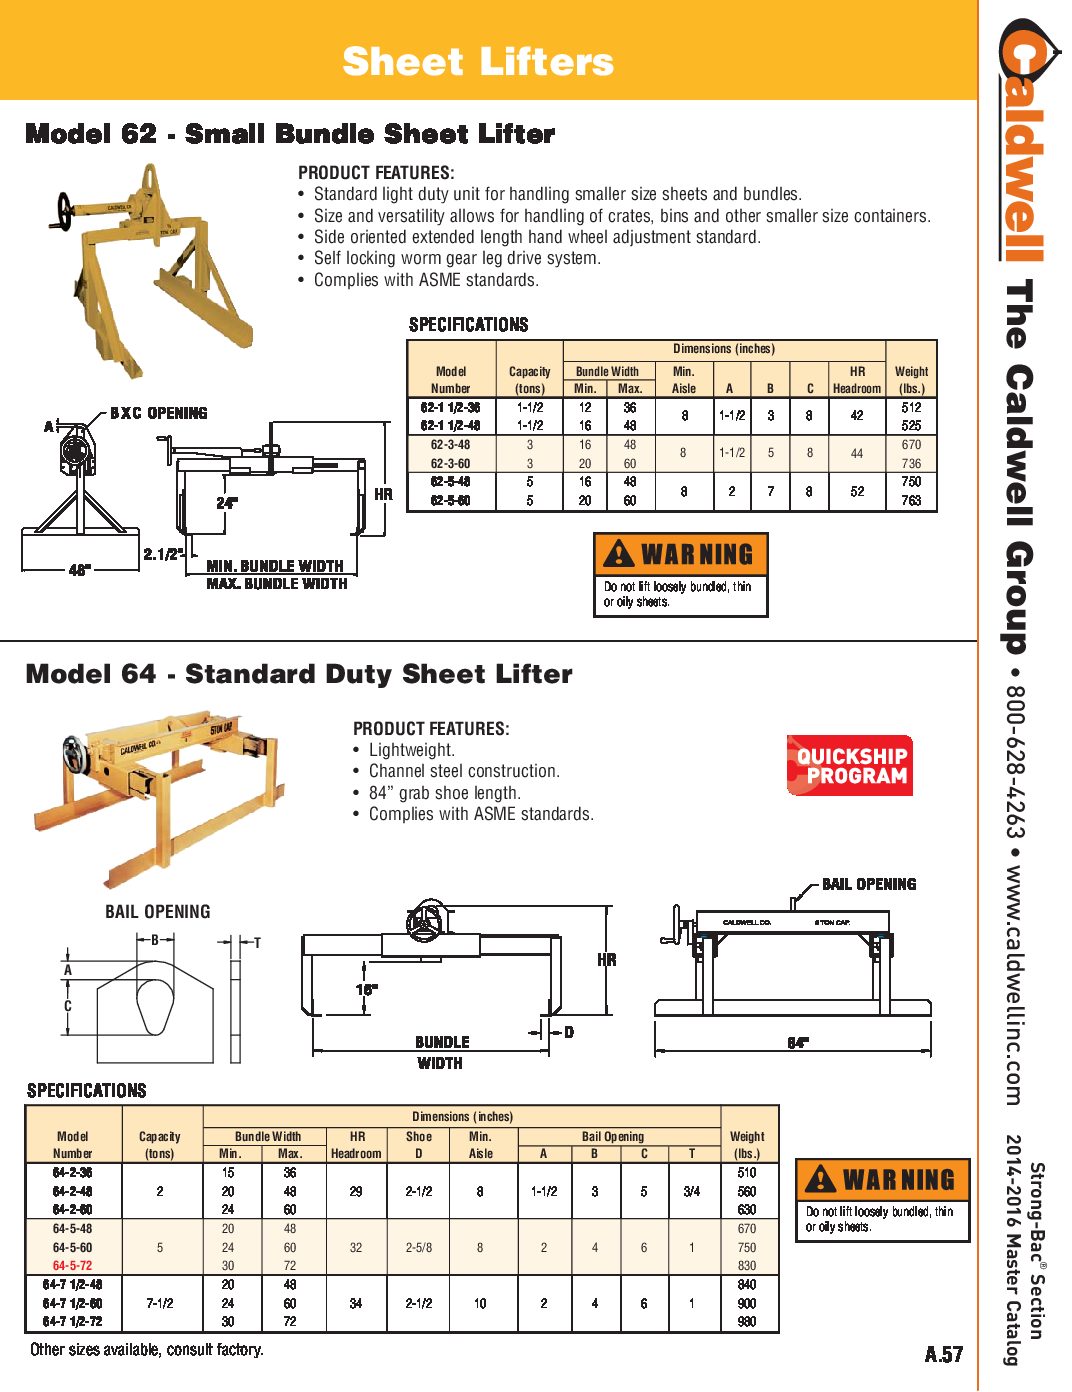 Caldwell STRONG BAC Standard Duty Sheet Lifter Spread Sheet pdf